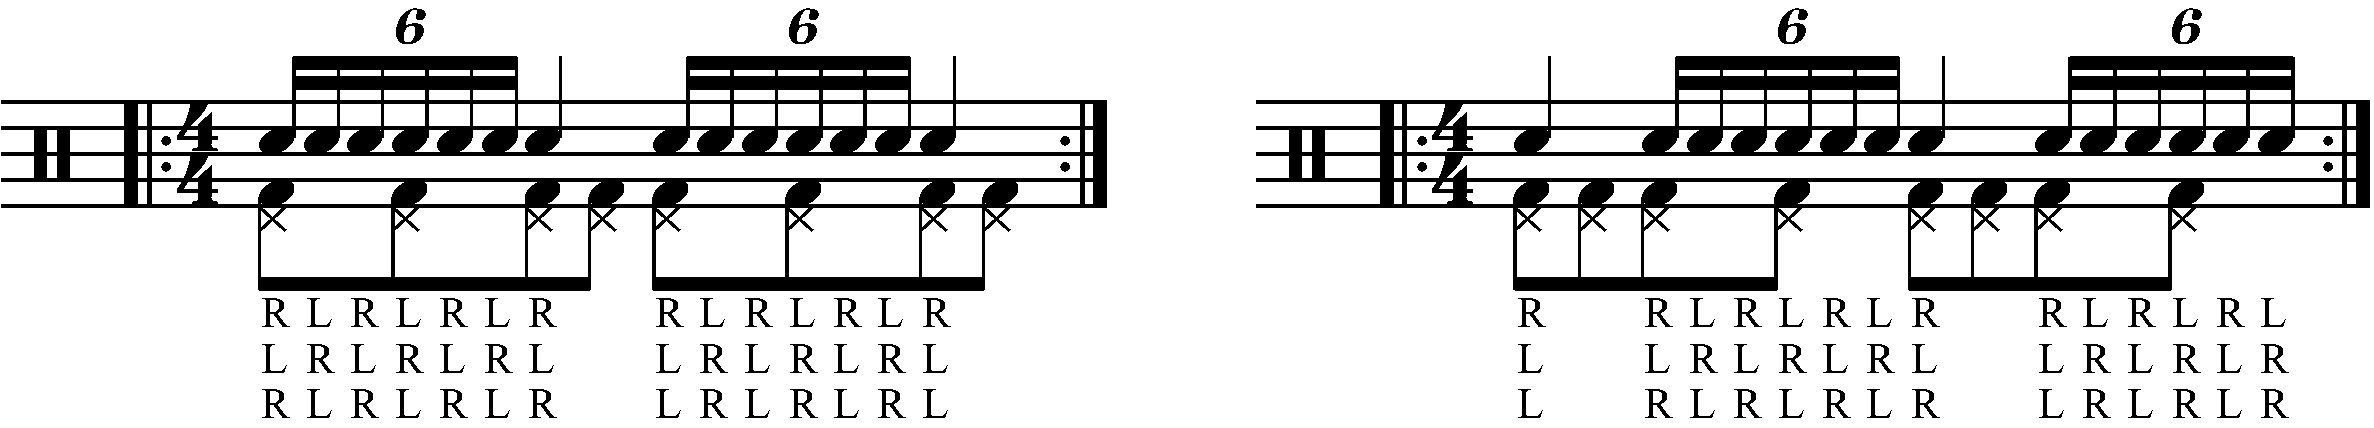 Adding eighth note feet under a single stroke 7